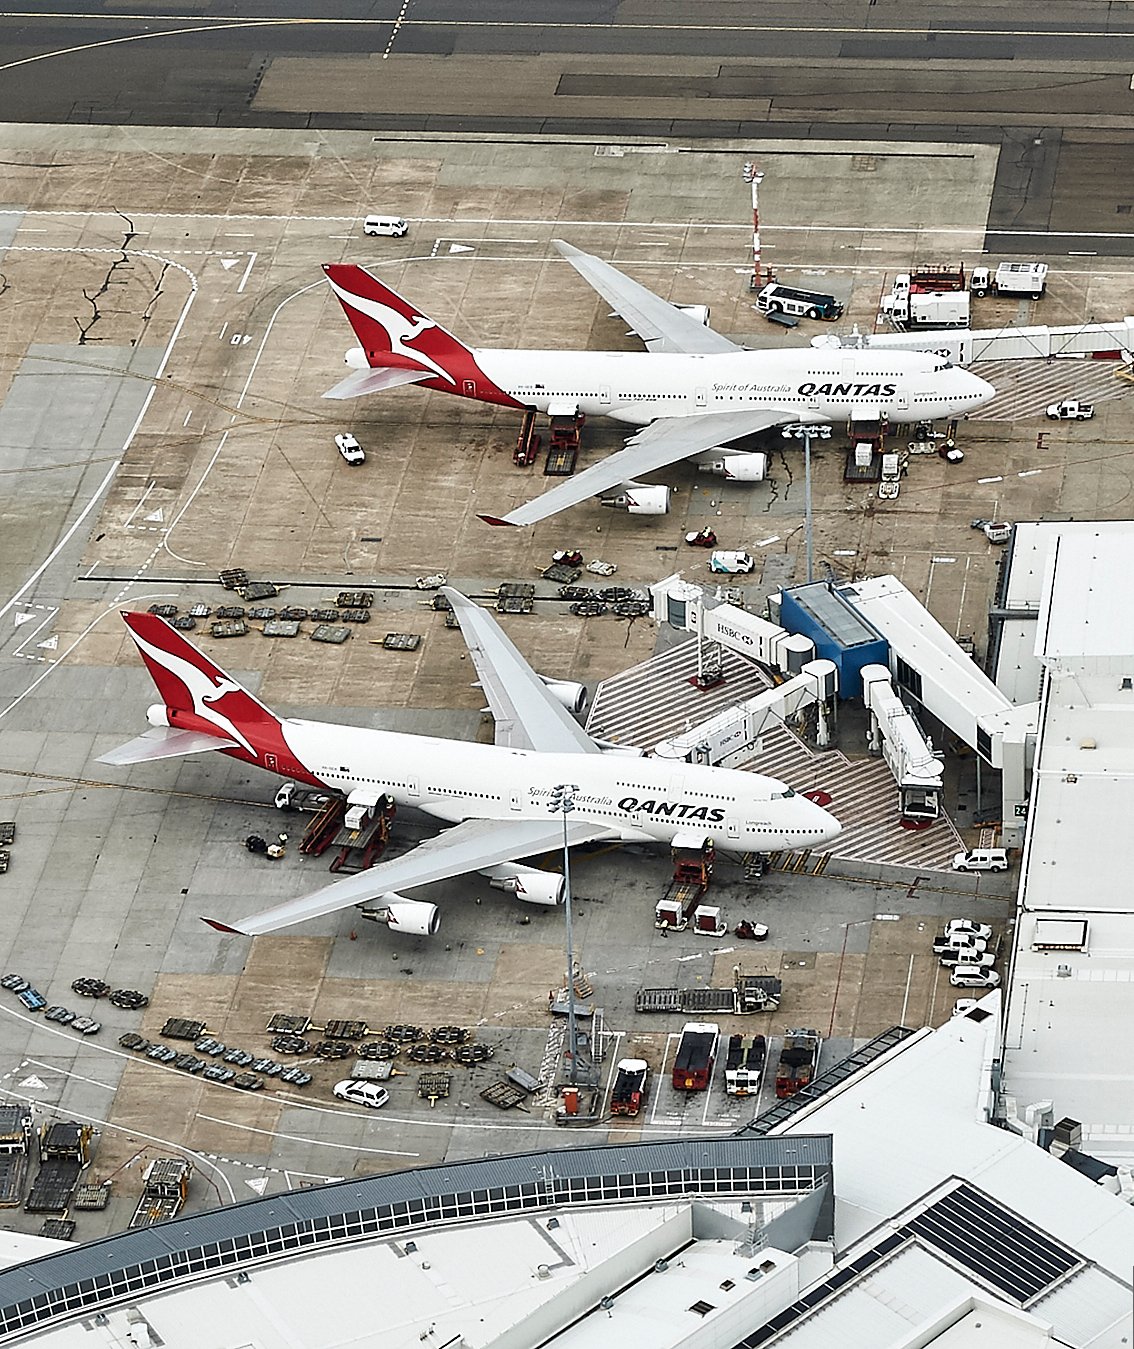 Sydney International airport